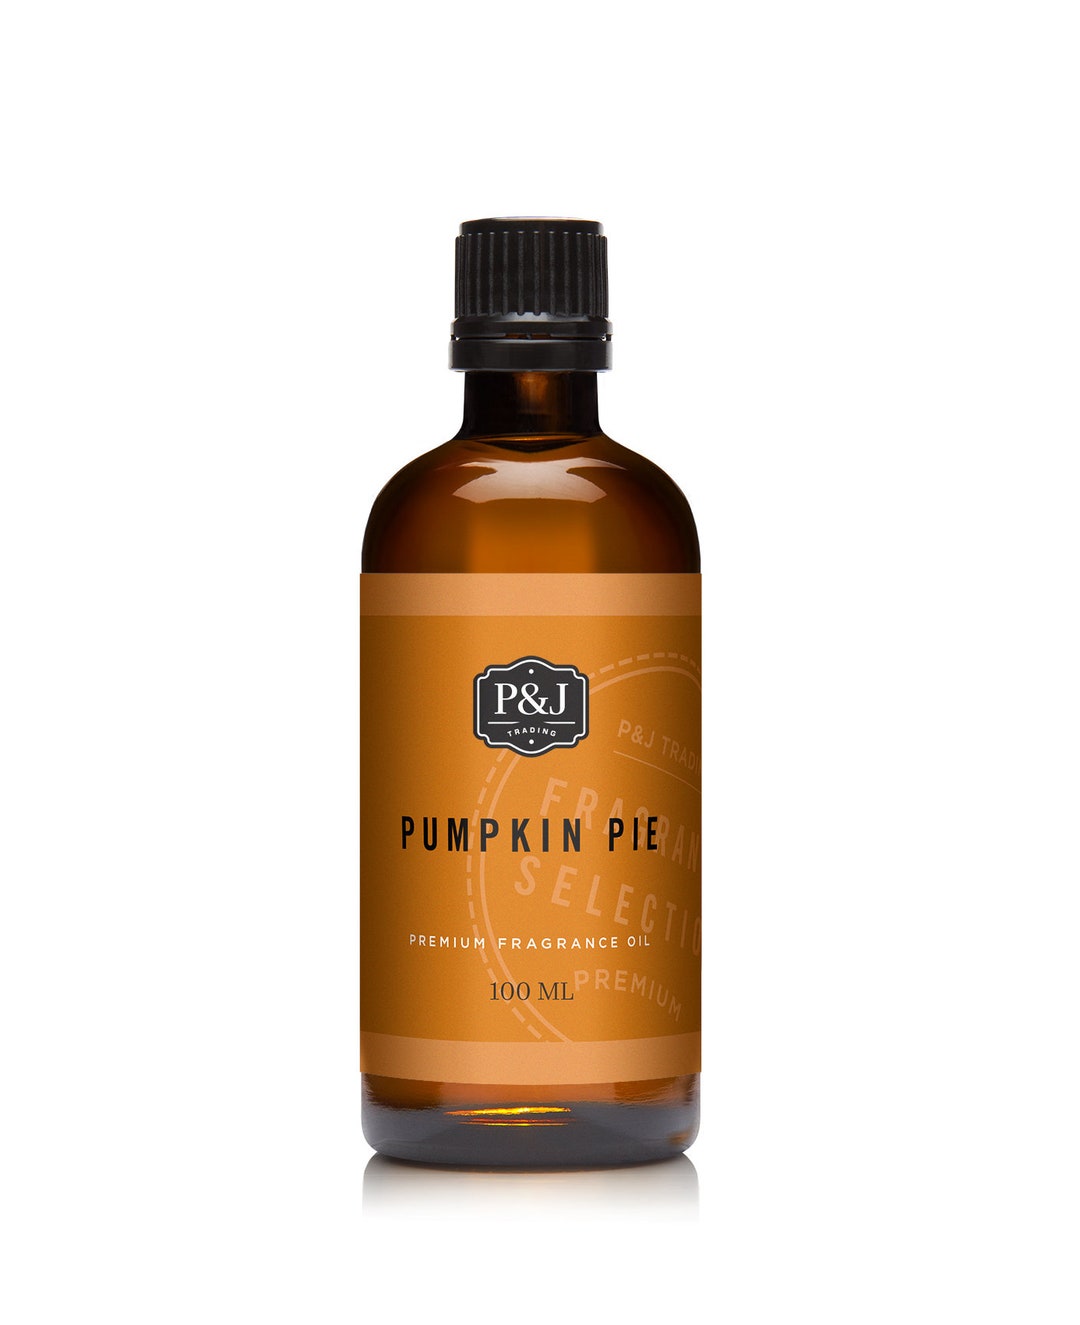  P&J Trading Spice Set of 6 Premium Grade Fragrance Oils -  Cinnamon, Harvest Spice, Apple Cider, Coffee Cake, Gingerbread, Pumpkin Pie  - 10ml